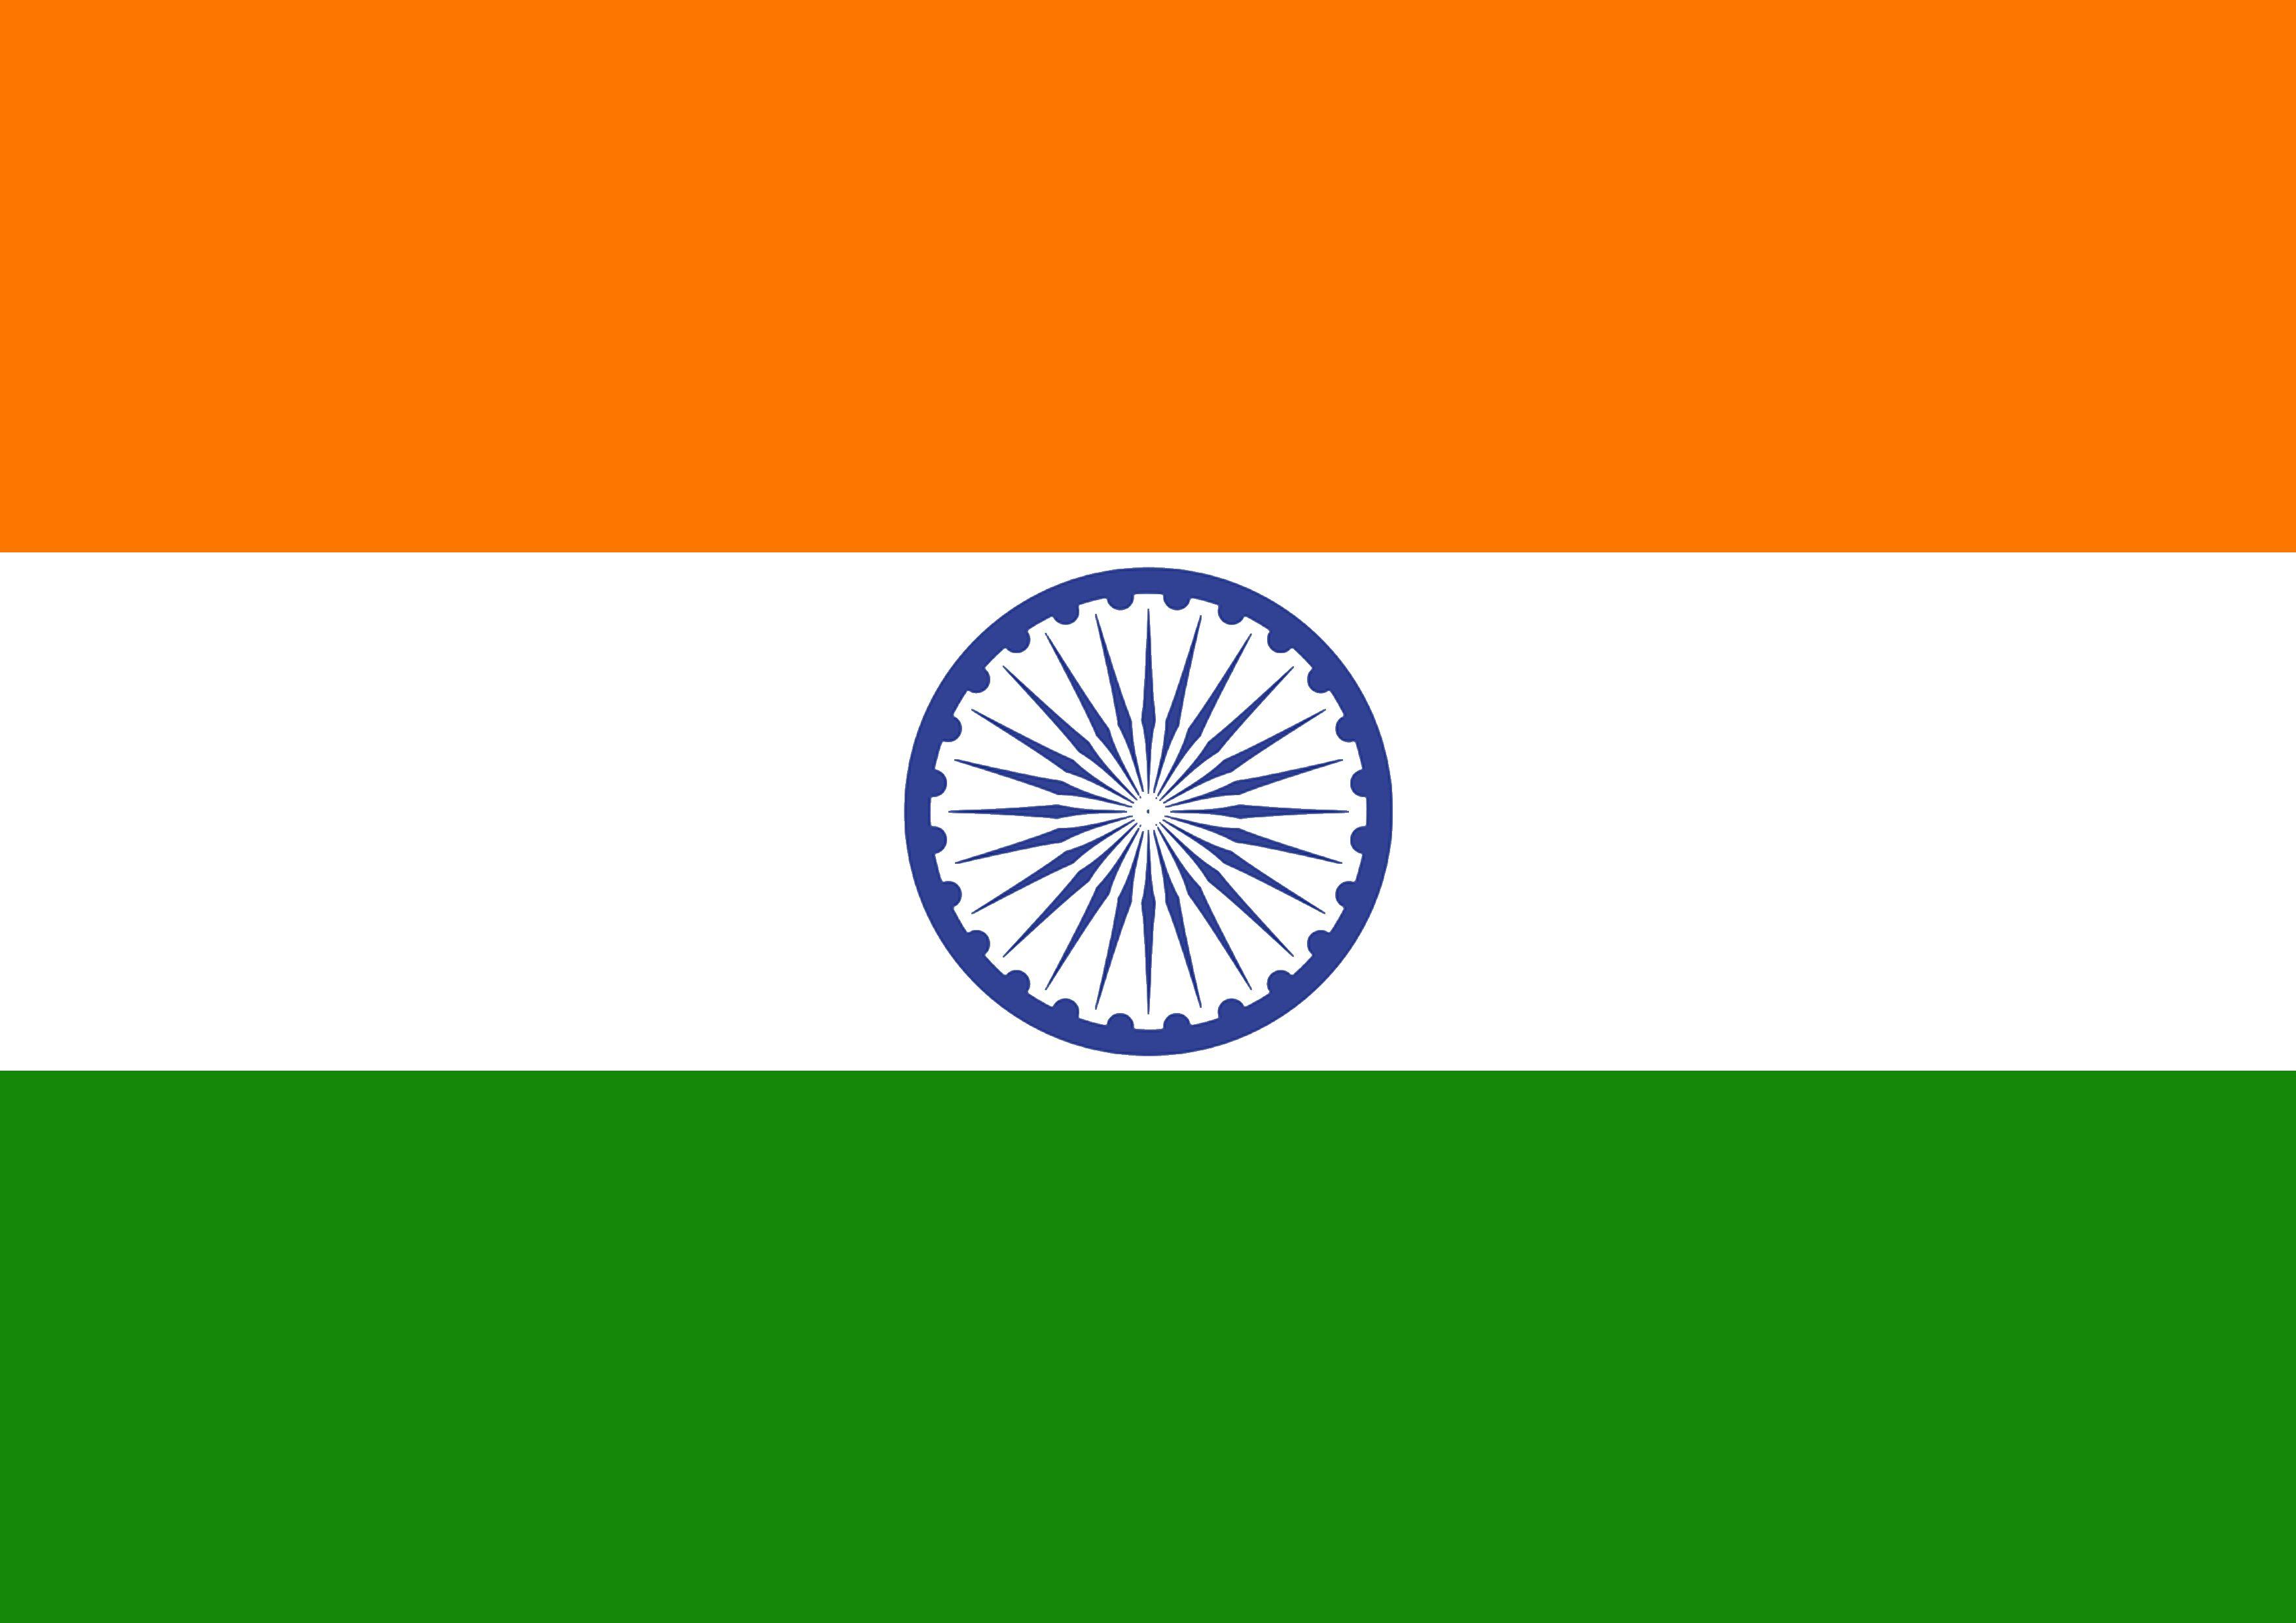 Bigraph Orange White Square Logo - National Flag of India Image, History of Indian Flag